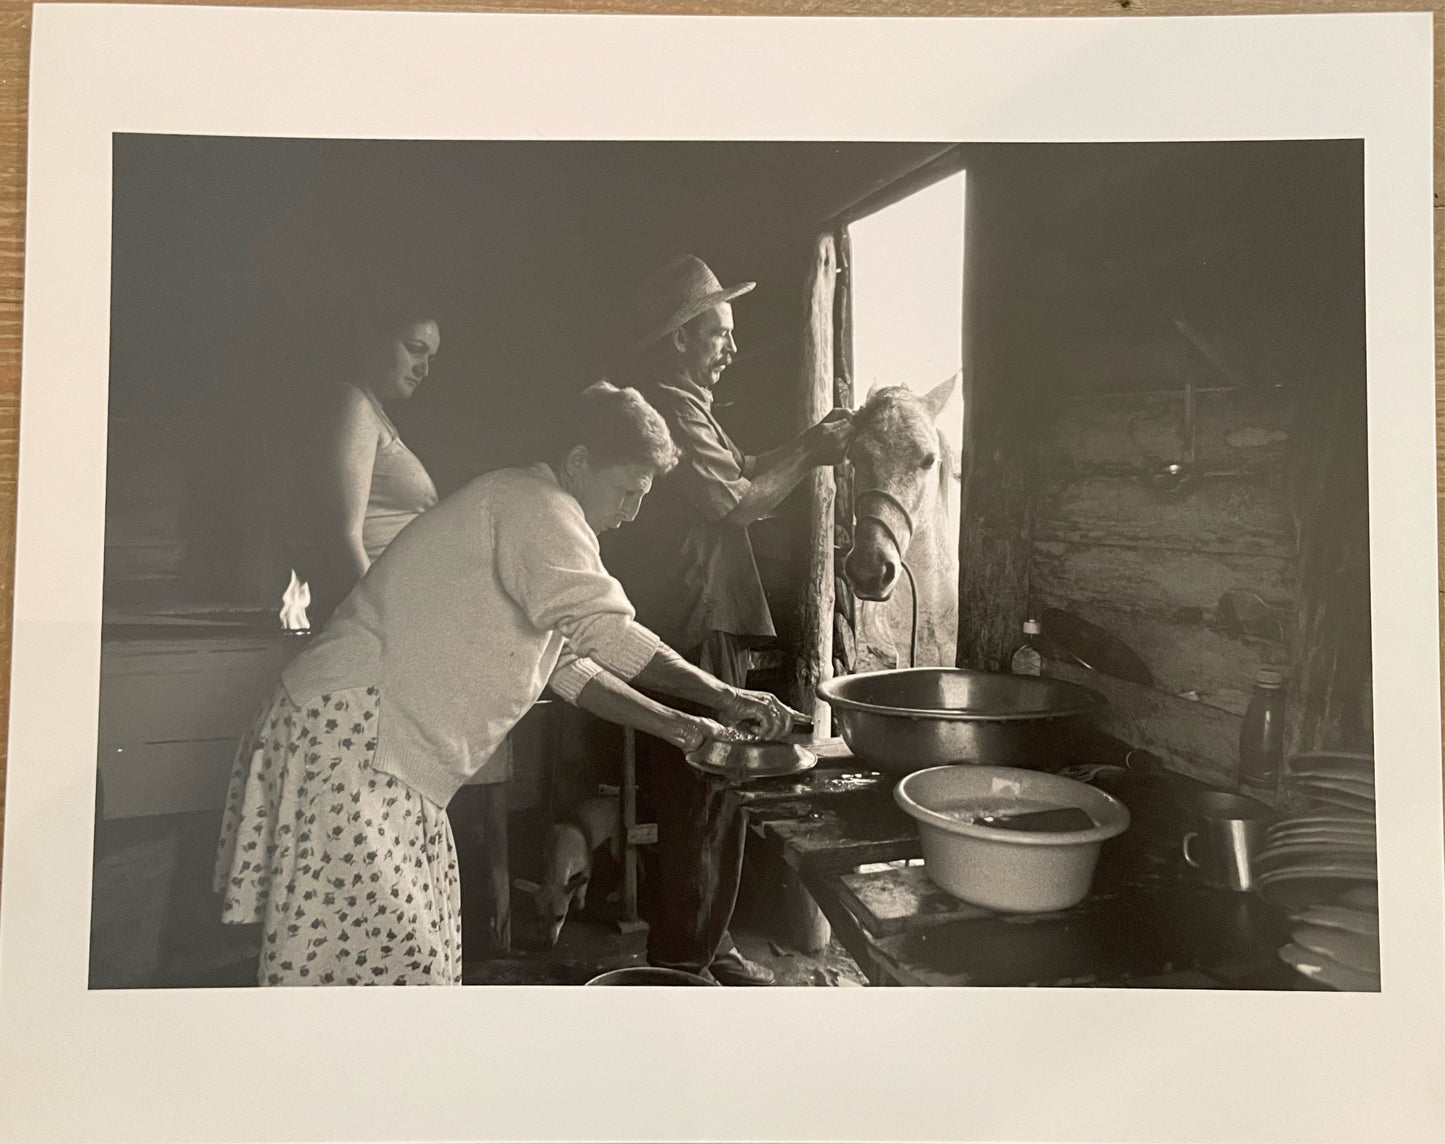 Susan S. Bank (American, 20th c.) Cuba Photograph Print Campo 8x10 Washing Dishes